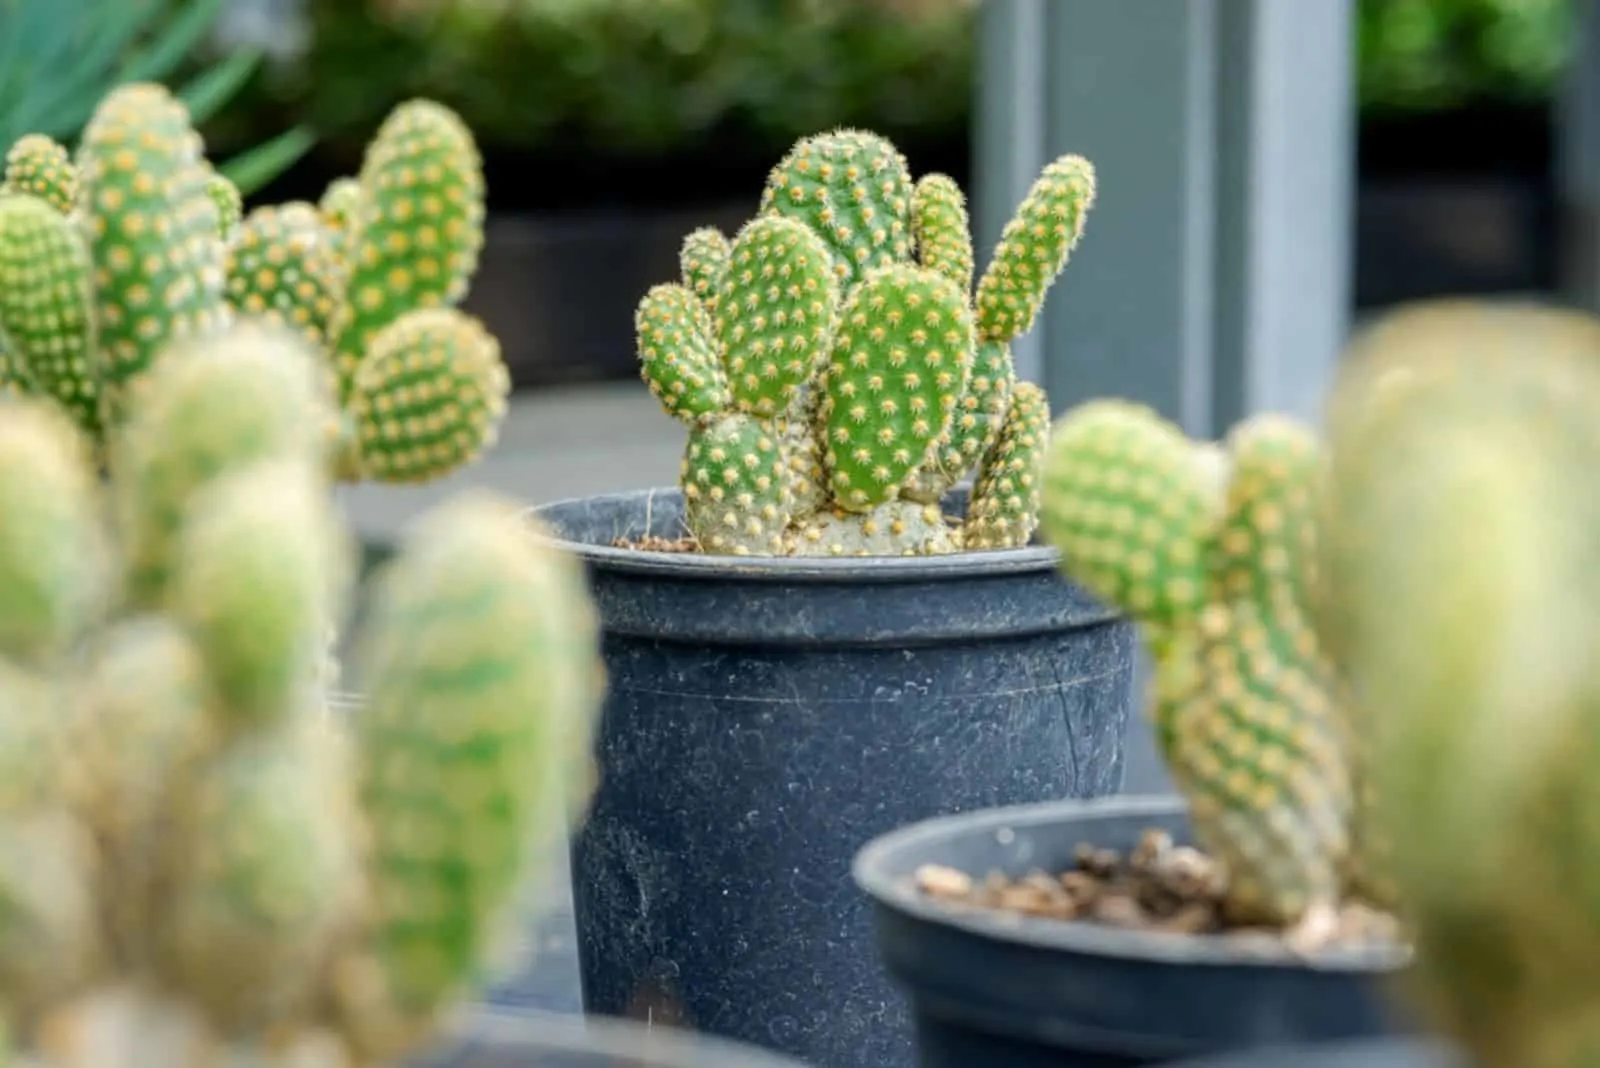 Bunny Ears Cactus in small black pots